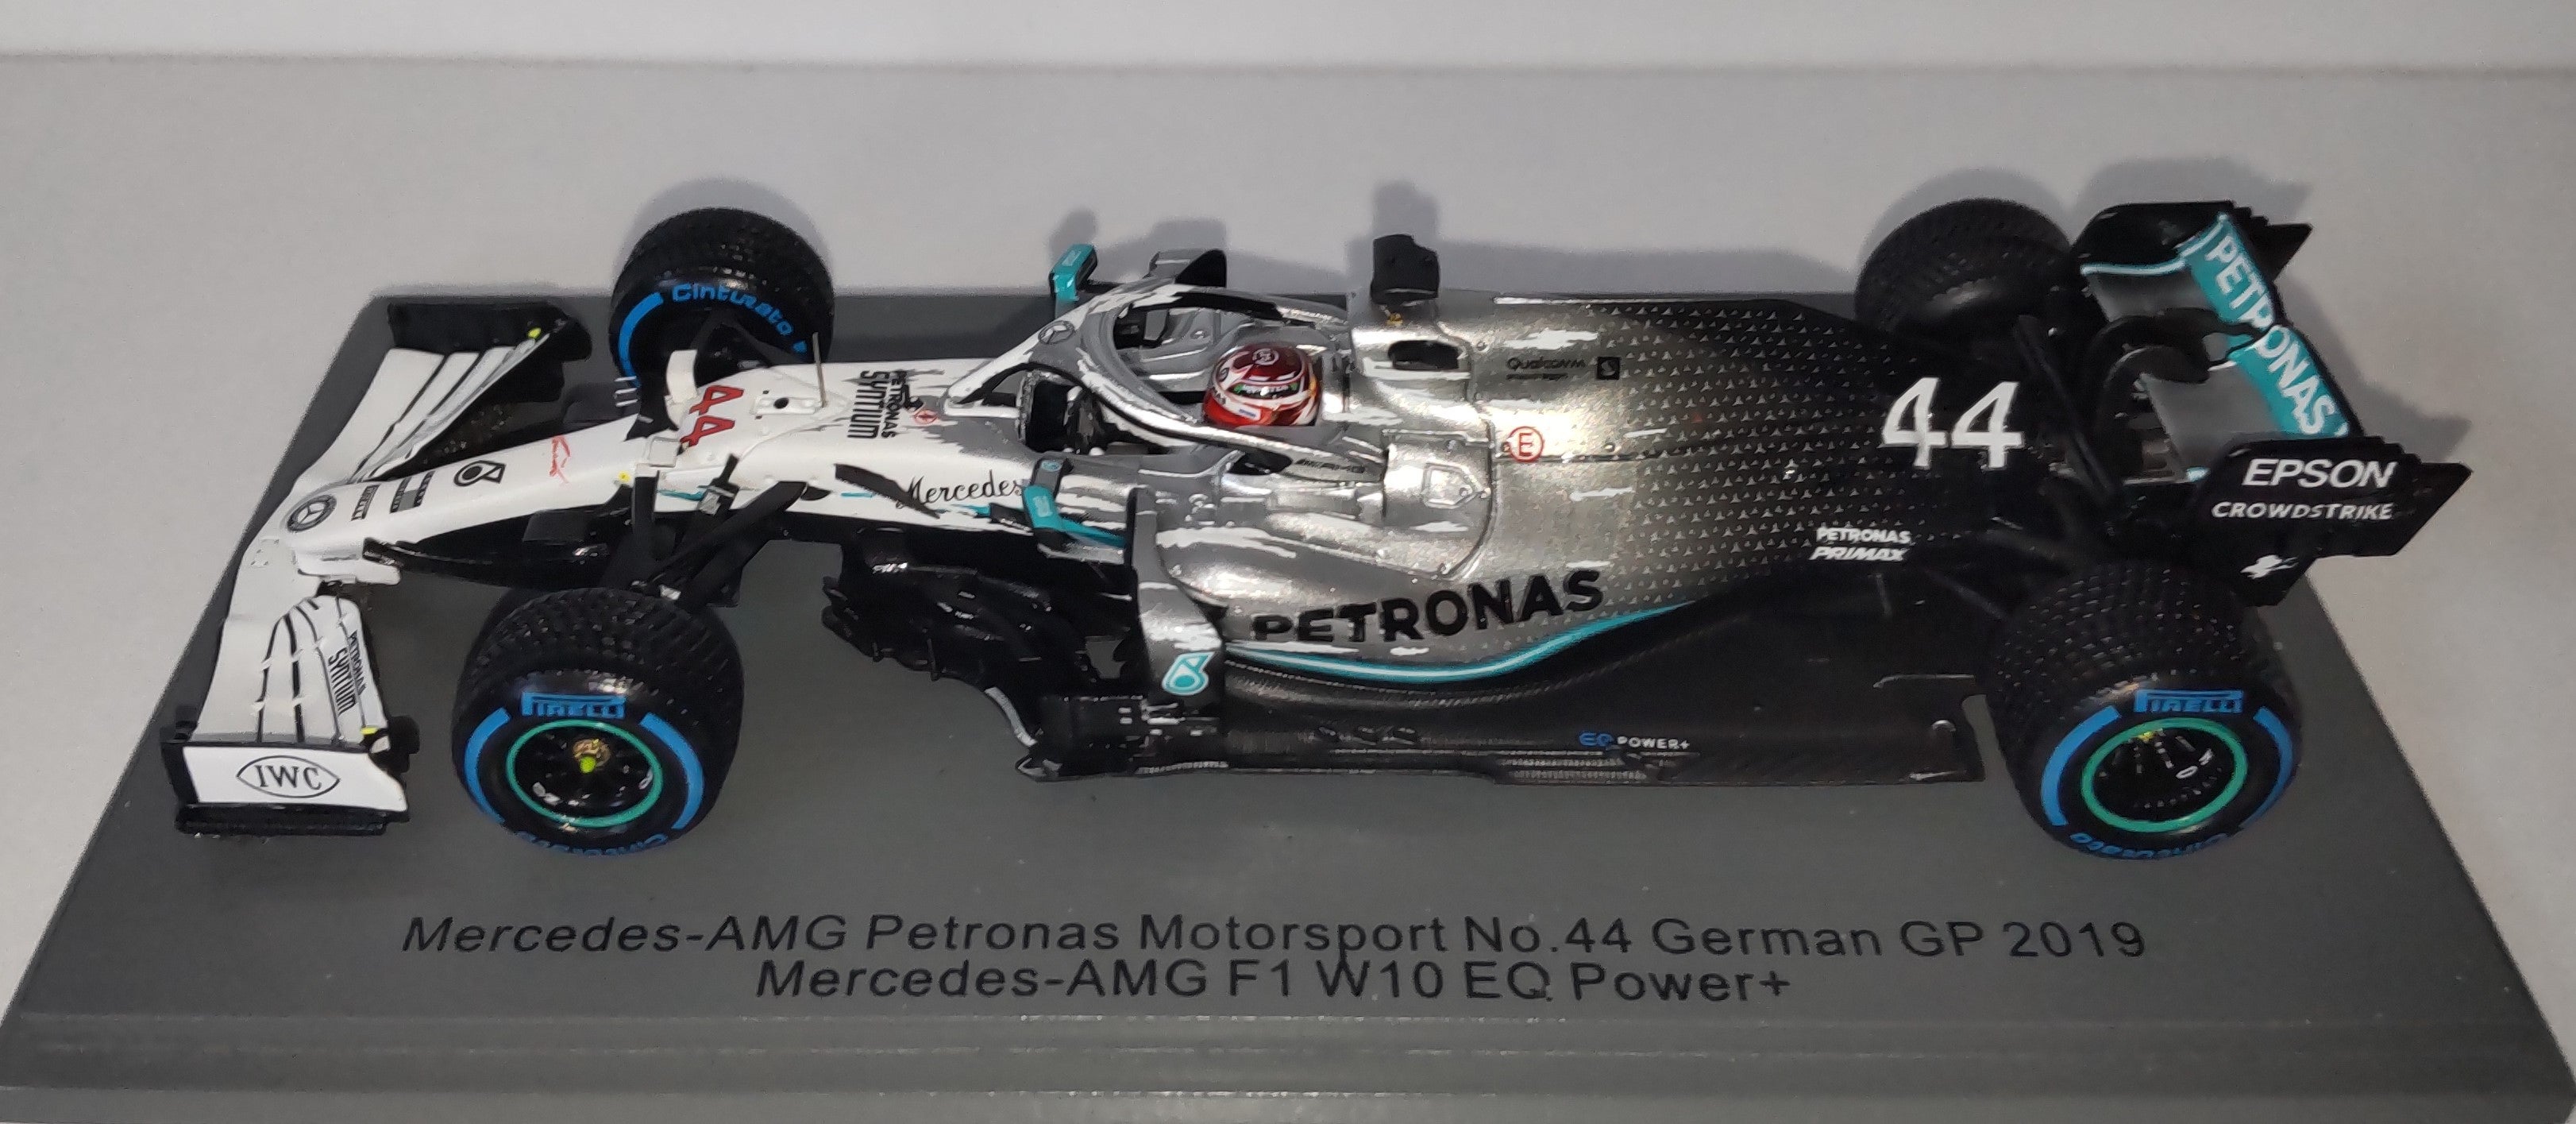 1/43 Spark Mercedes-AMG W10 ドイツGP 2019 - ミニカー